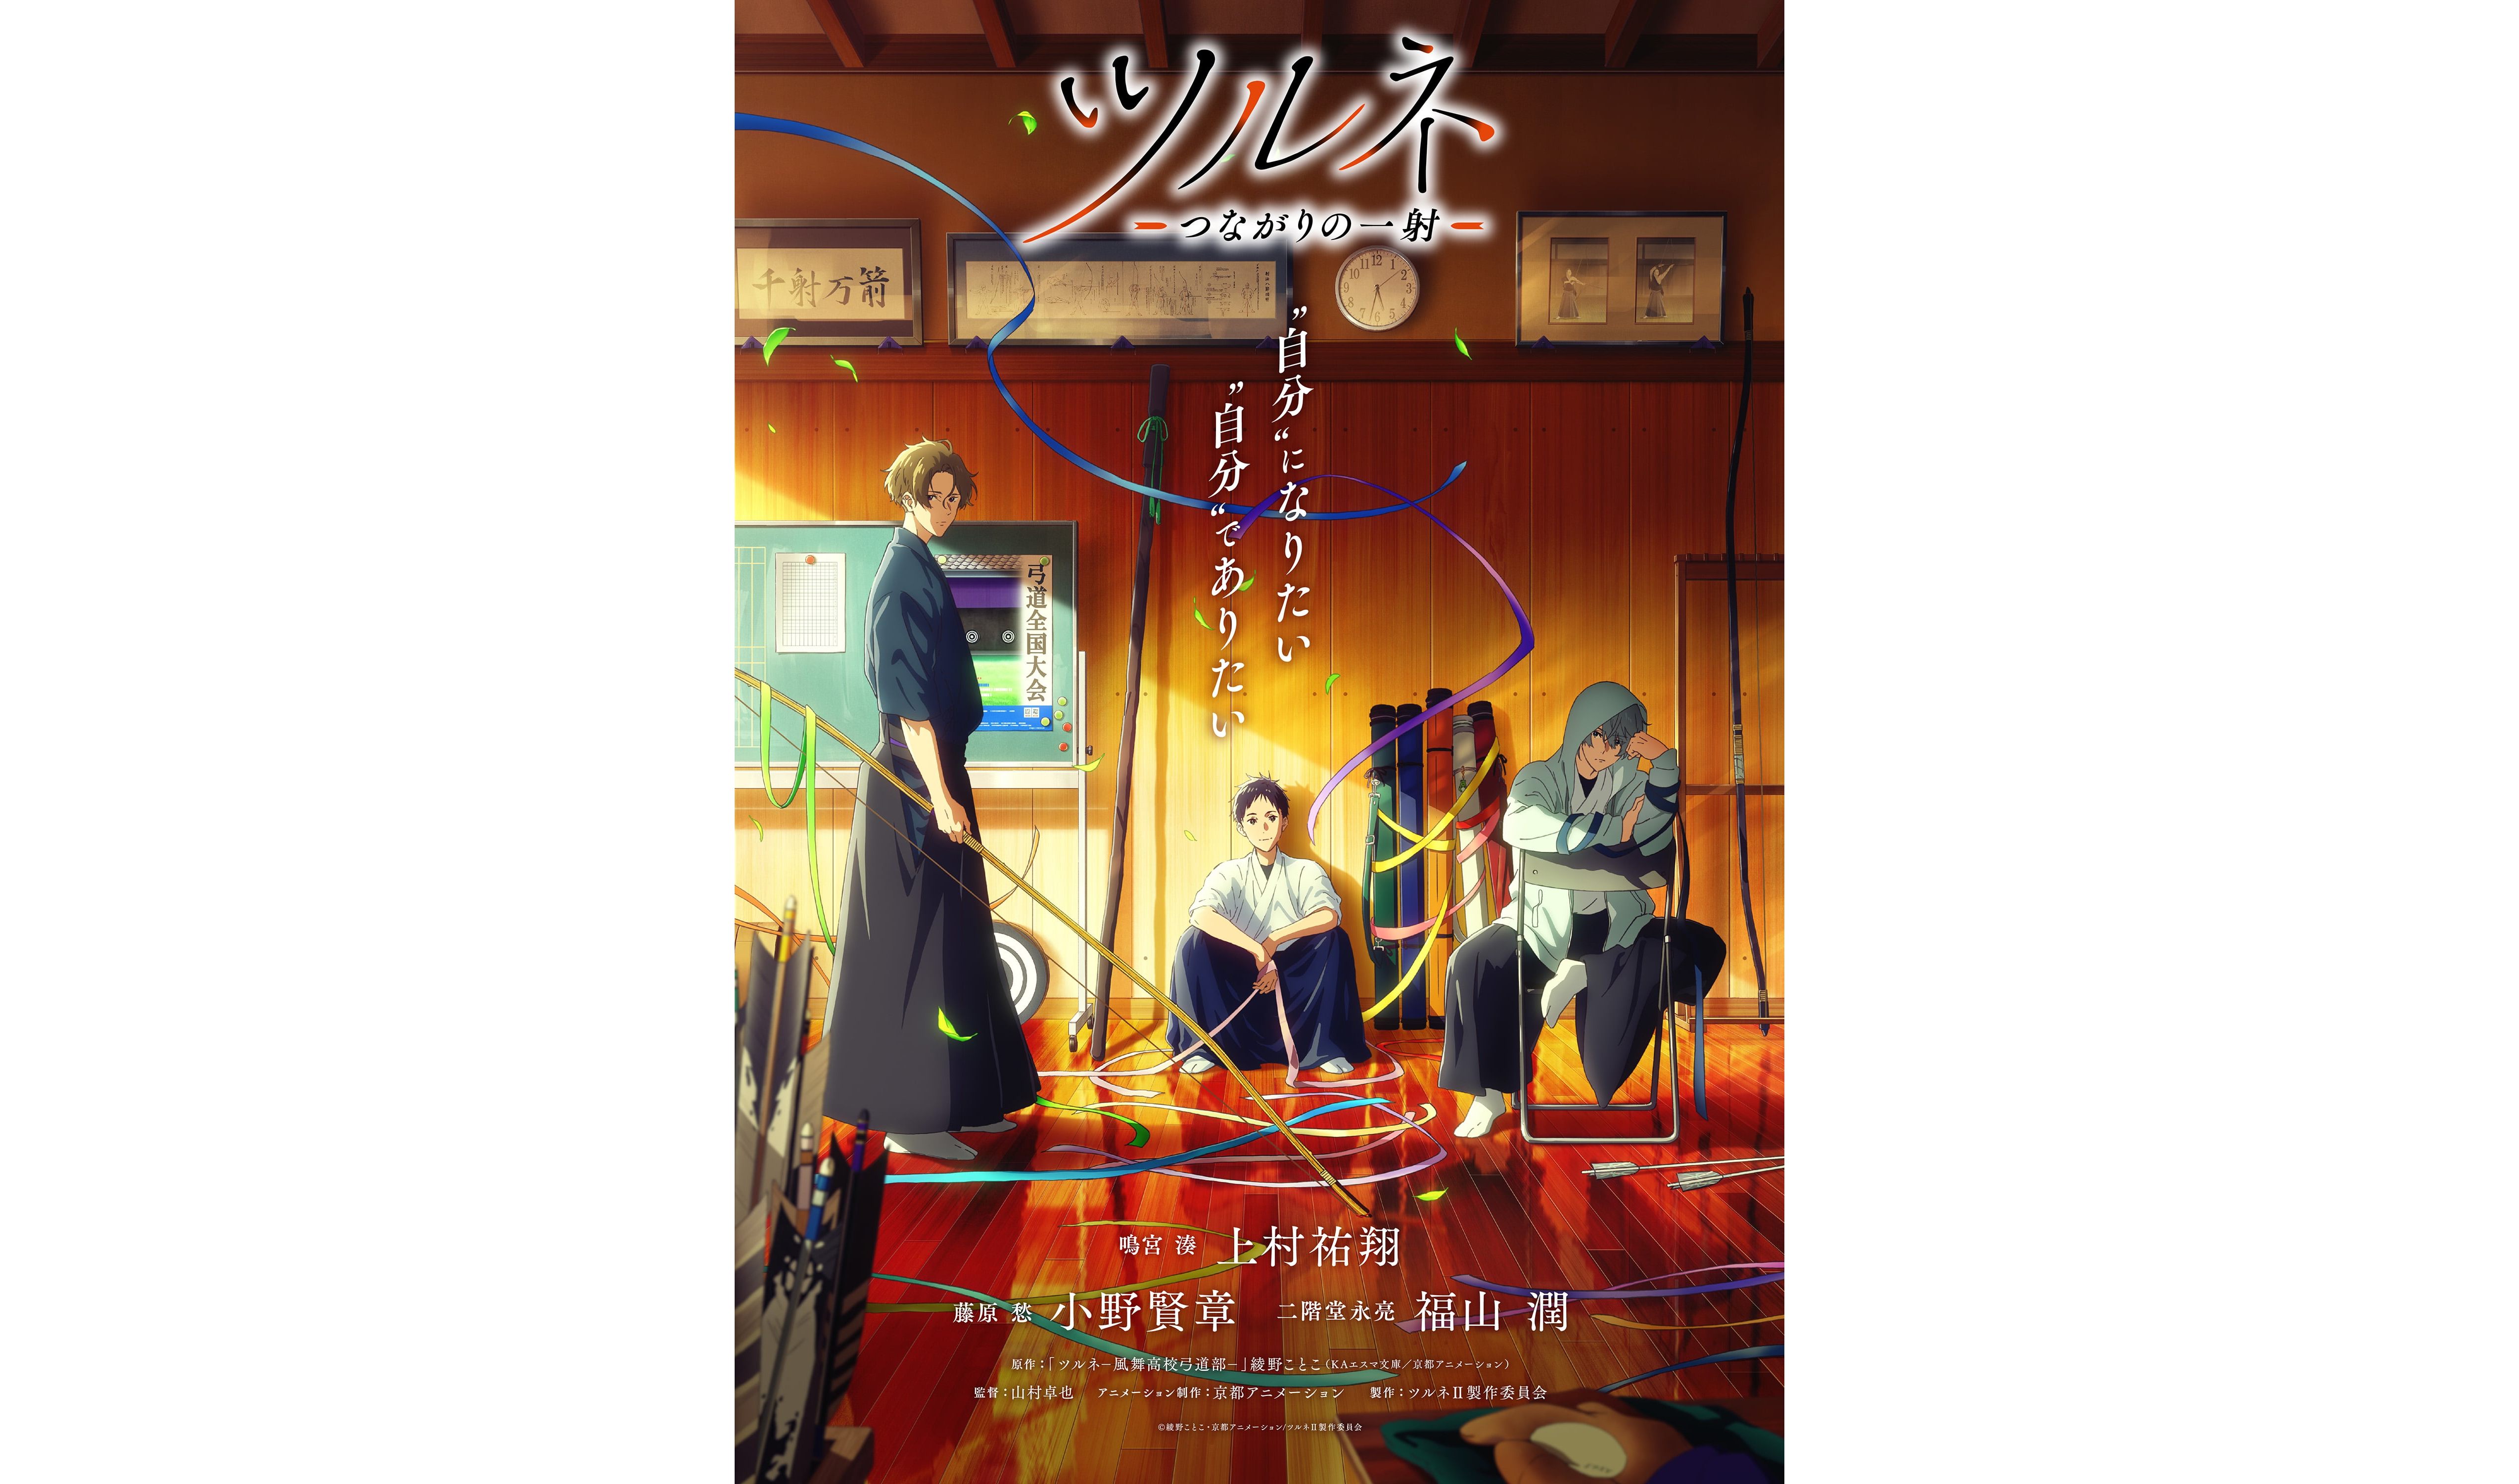 Tsurune: Tsunagari no Issha Receives 1st Full Trailer, Key Visual, New Cast  Info